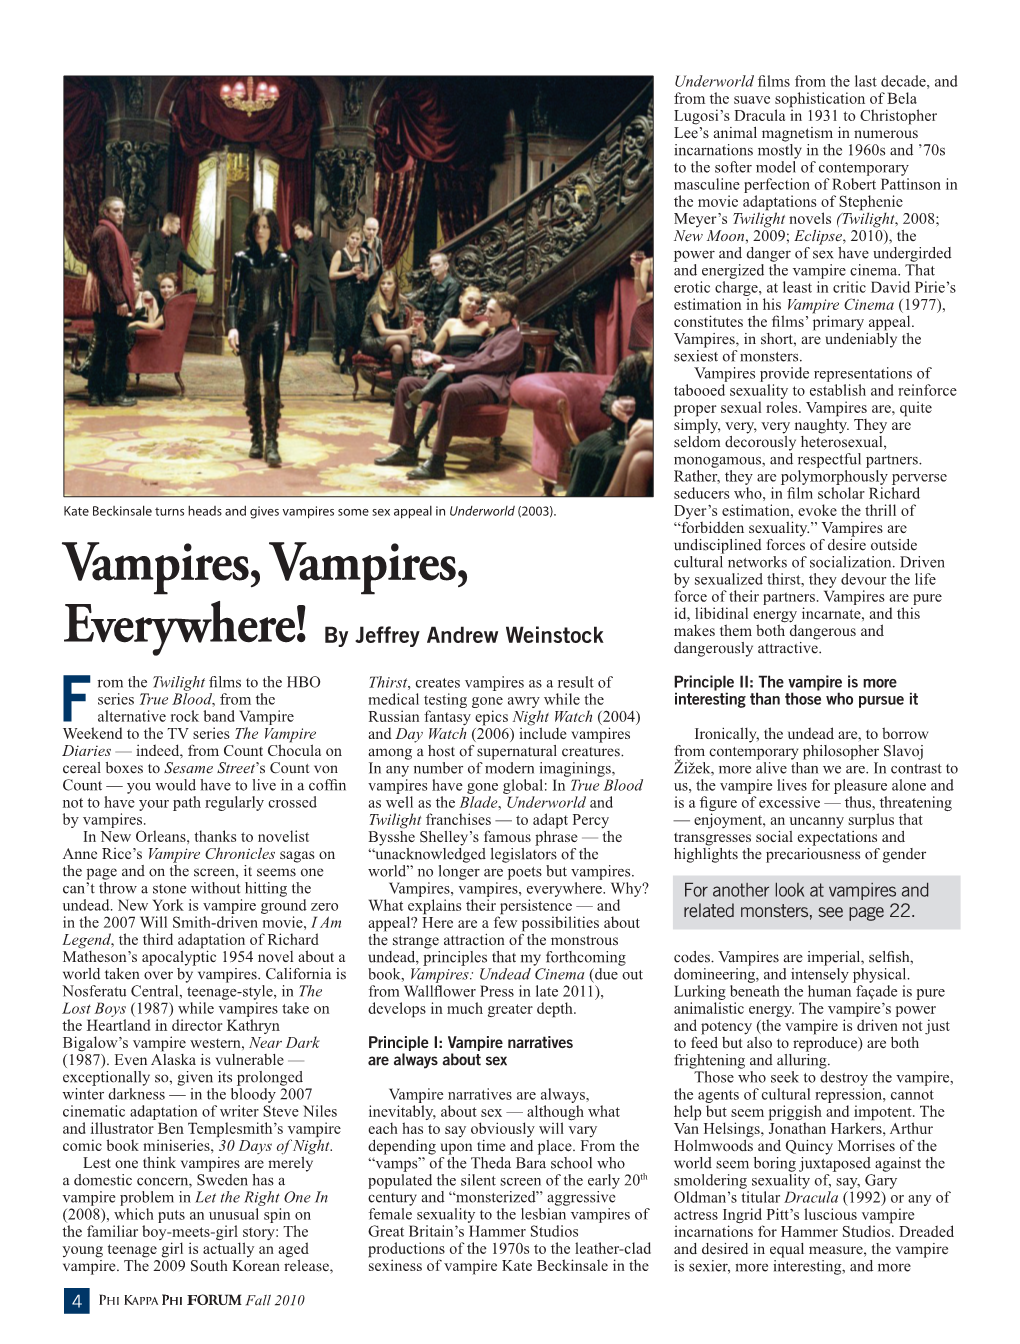 Vampires, Vampires, Everywhere! by Jeffrey Andrew Weinstock